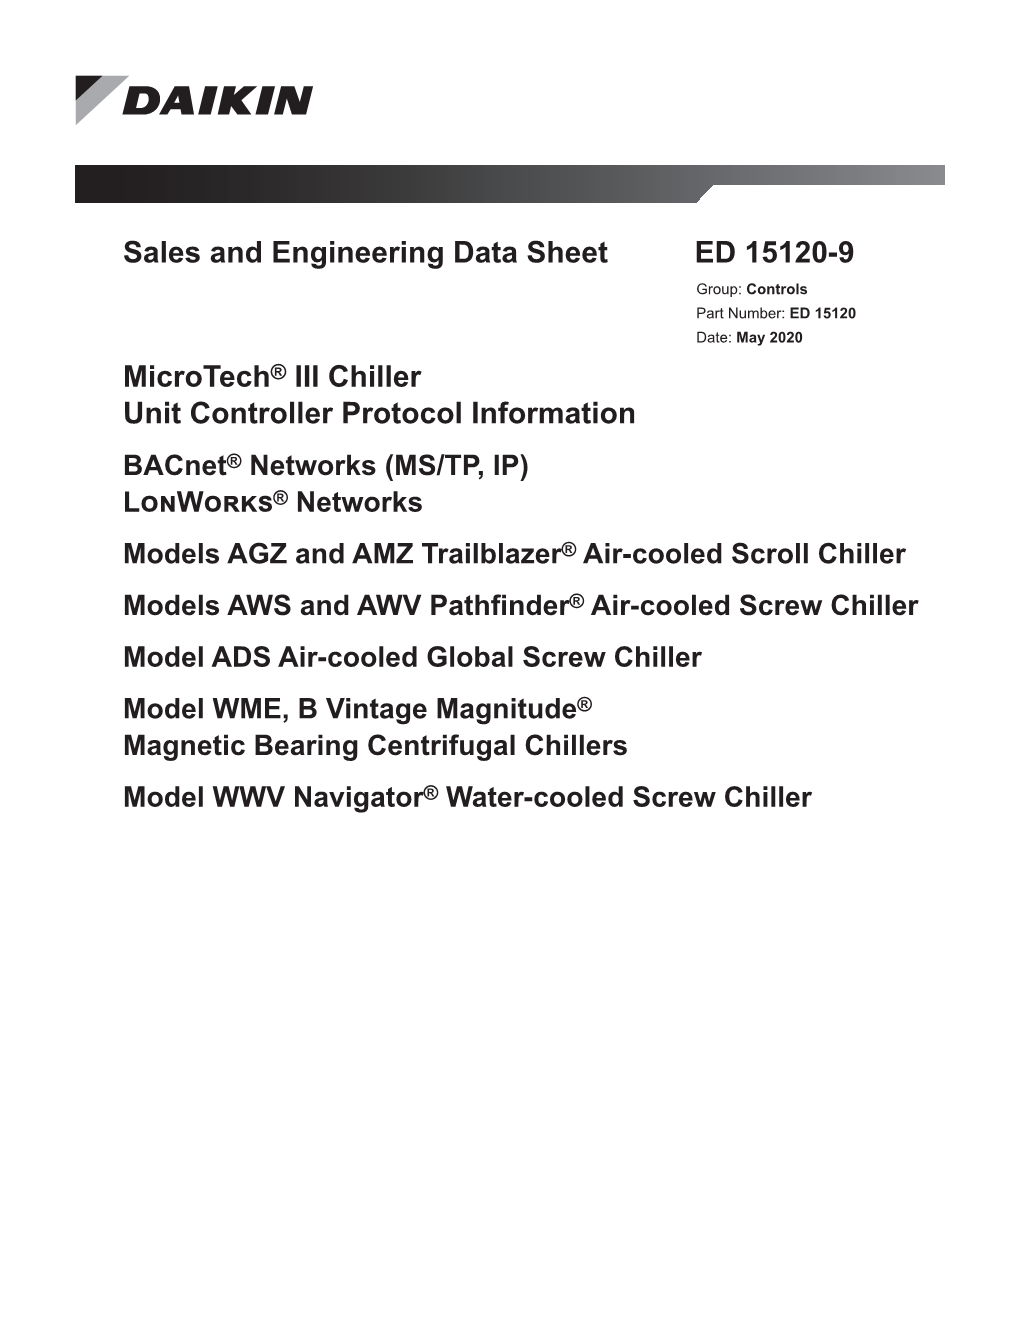 Microtech Unit Controller Lonworks-Bacnet Tech Sheet